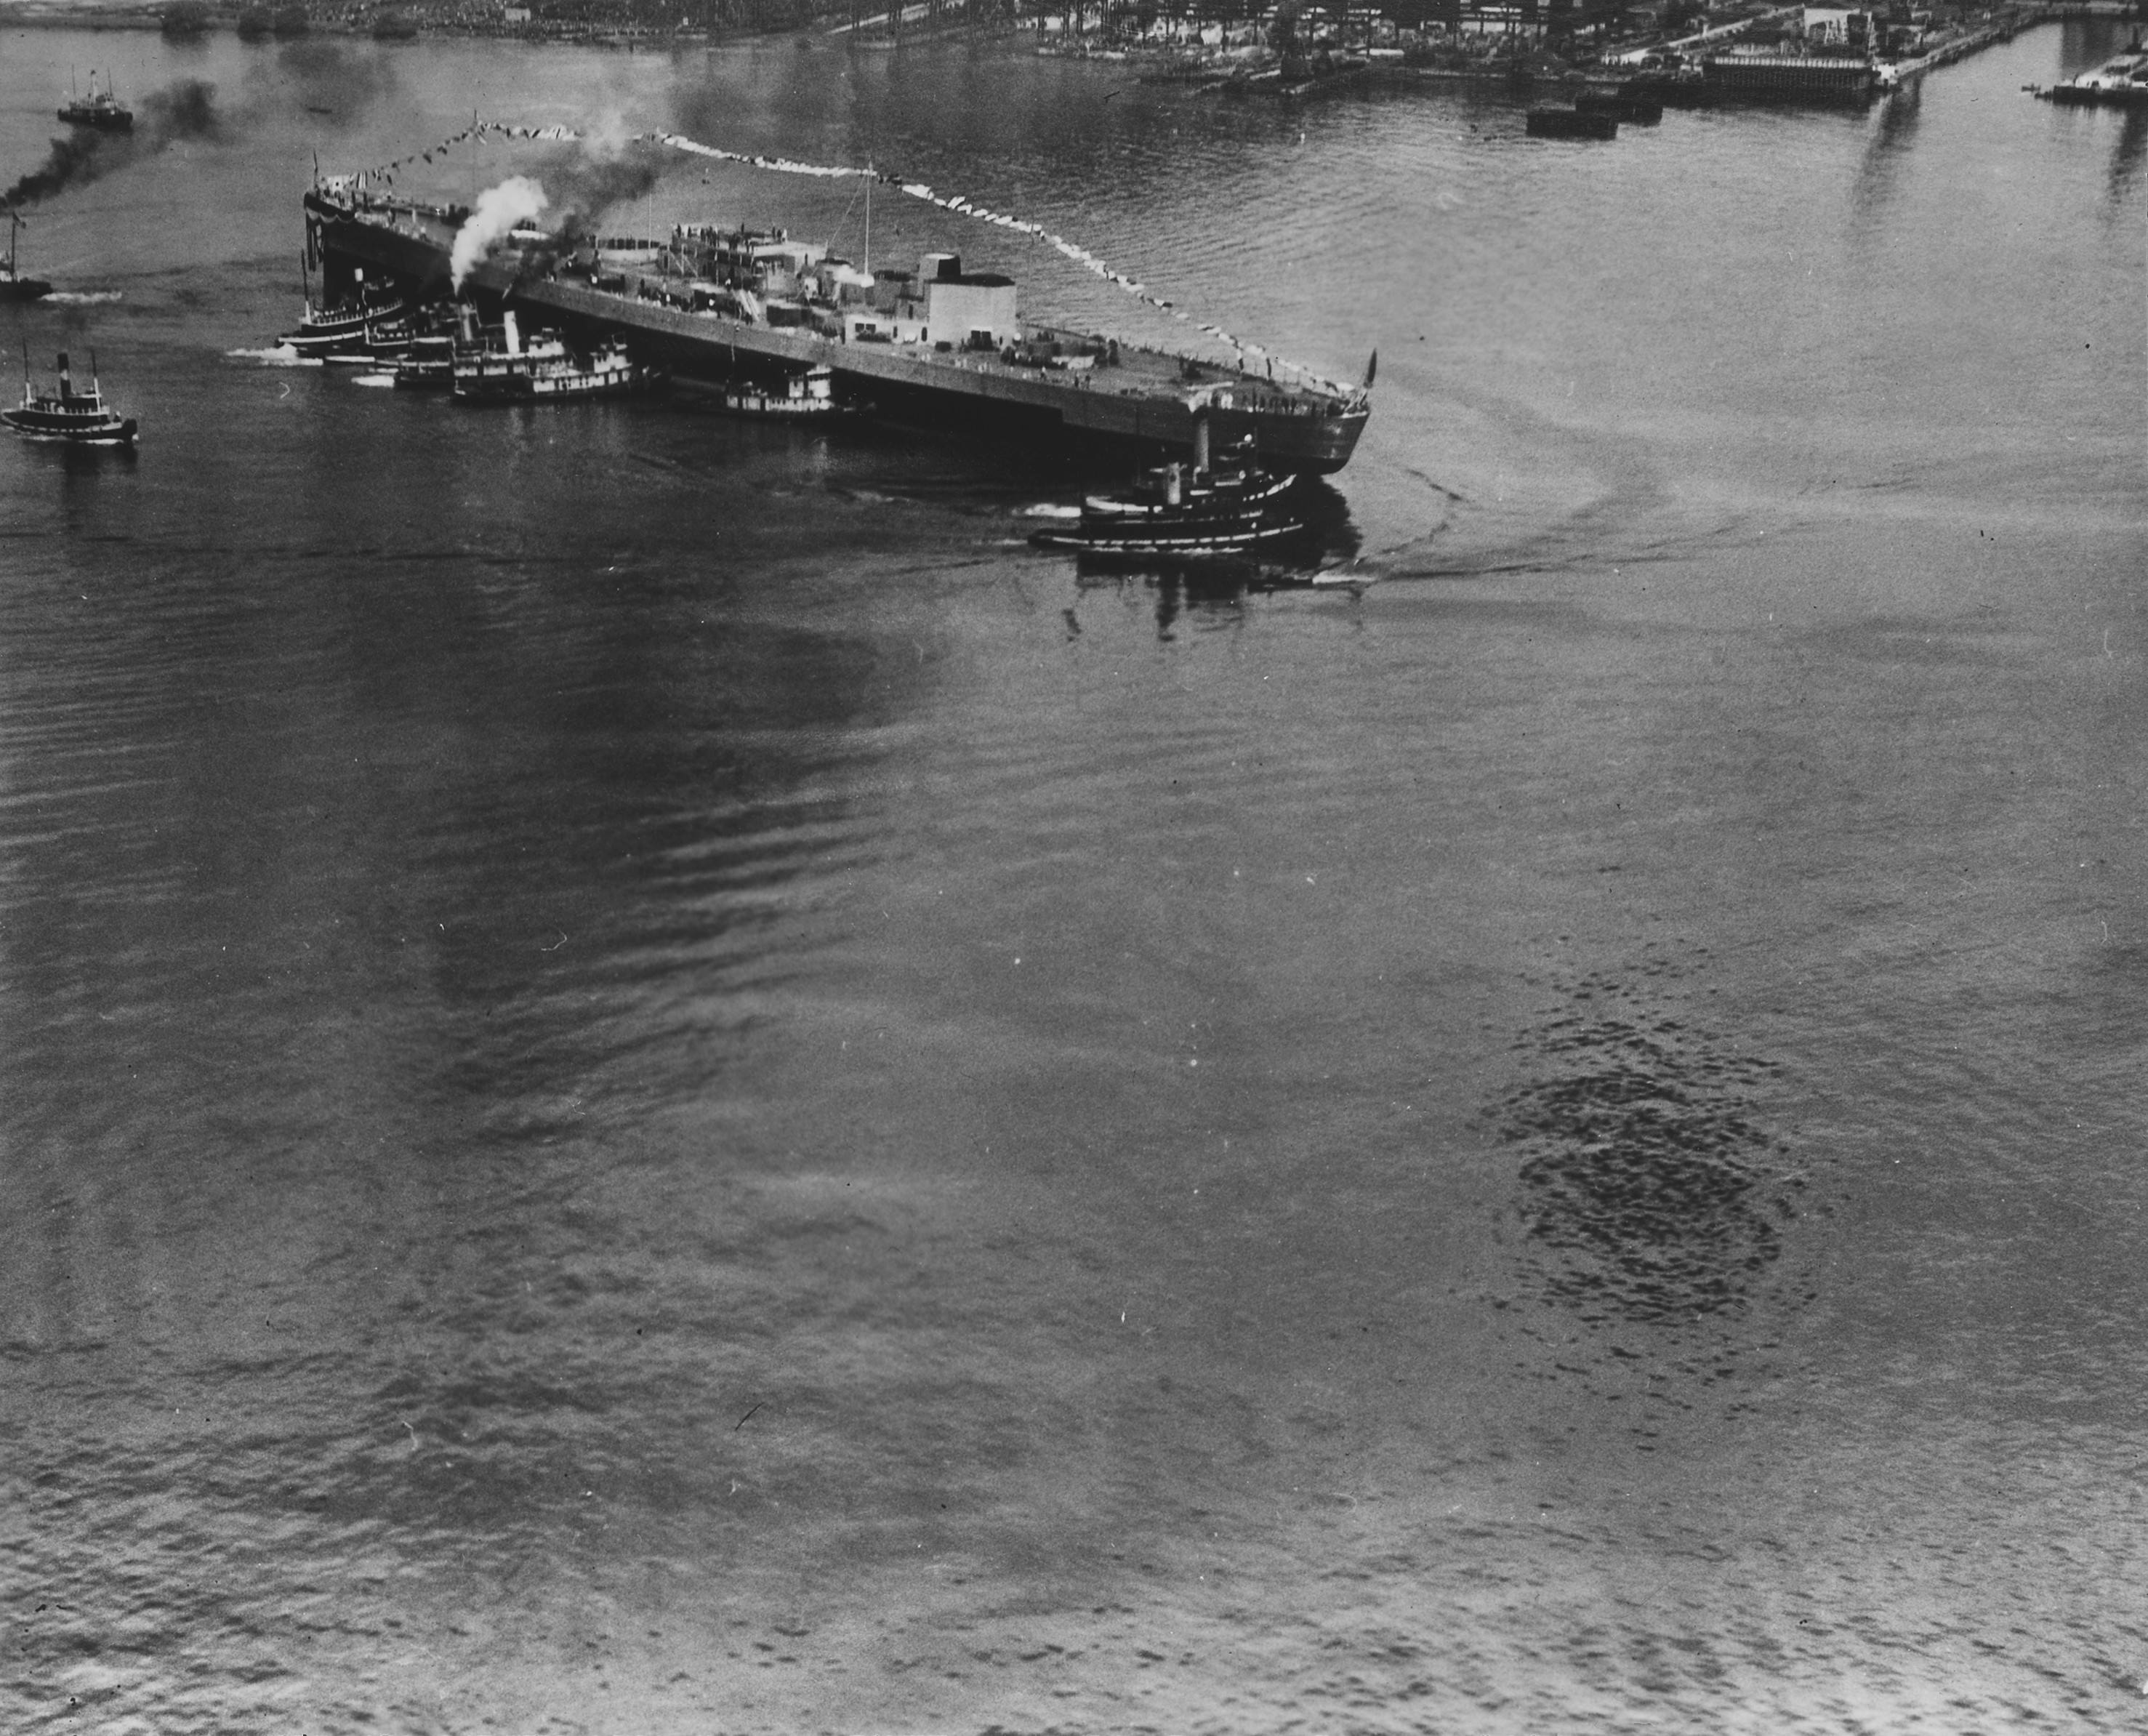 Launching of battleship Washington, Philadelphia Naval Shipyard, Pennsylvania, United States, 1 Jun 1940, photo 2 of 2